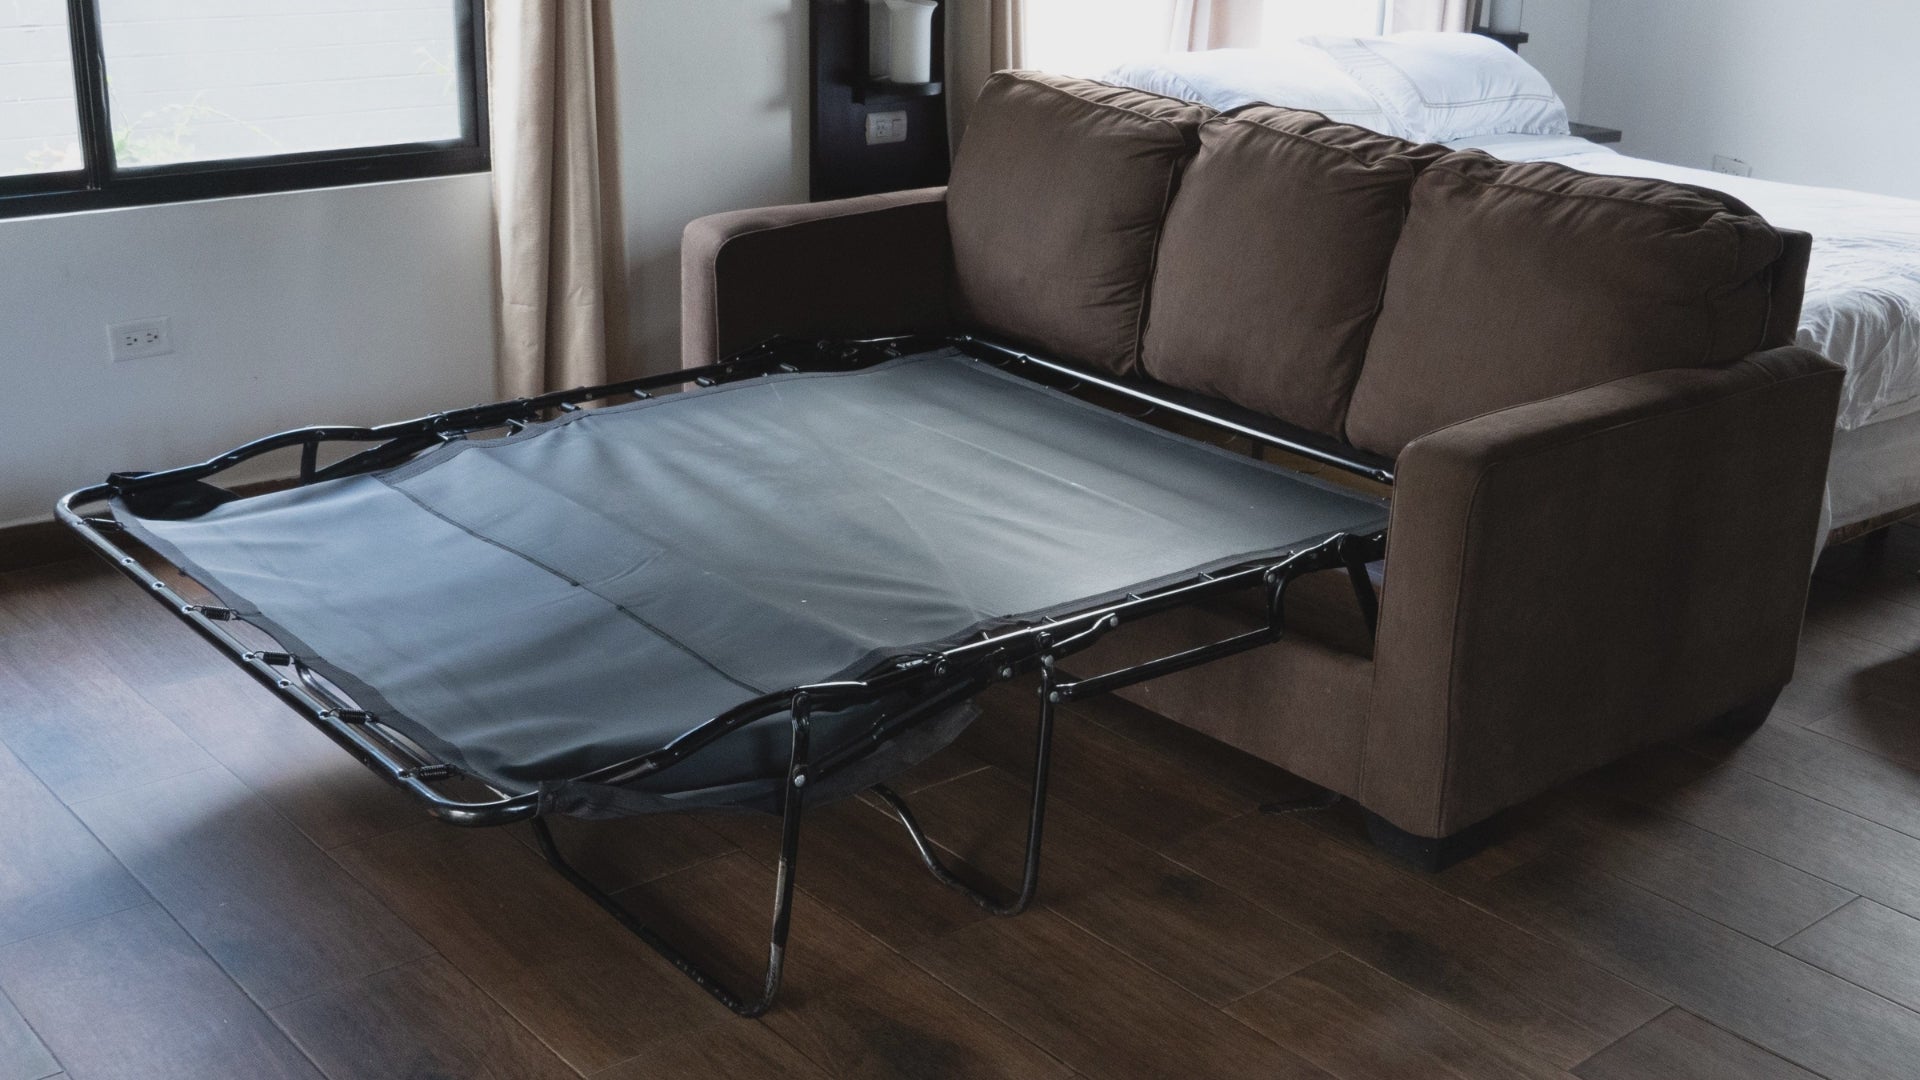 Meliusly® Sleeper Sofa Support Board - Foldable Sleeper Sofa Support for  Sofa Bed